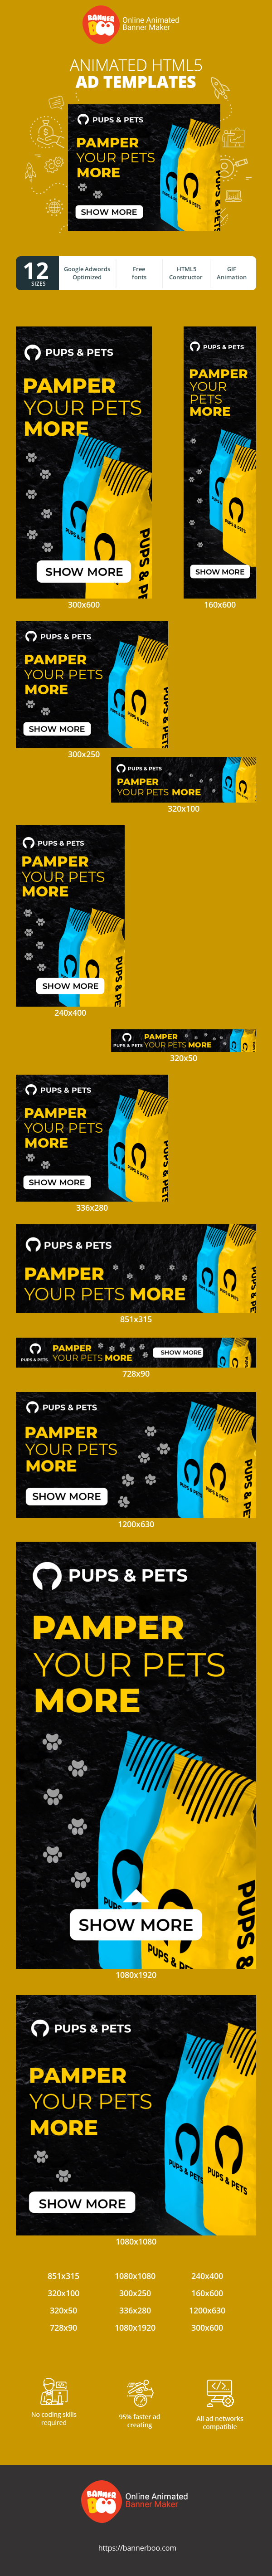 Шаблон рекламного банера — Pamper Your Pets More — Animal Feed